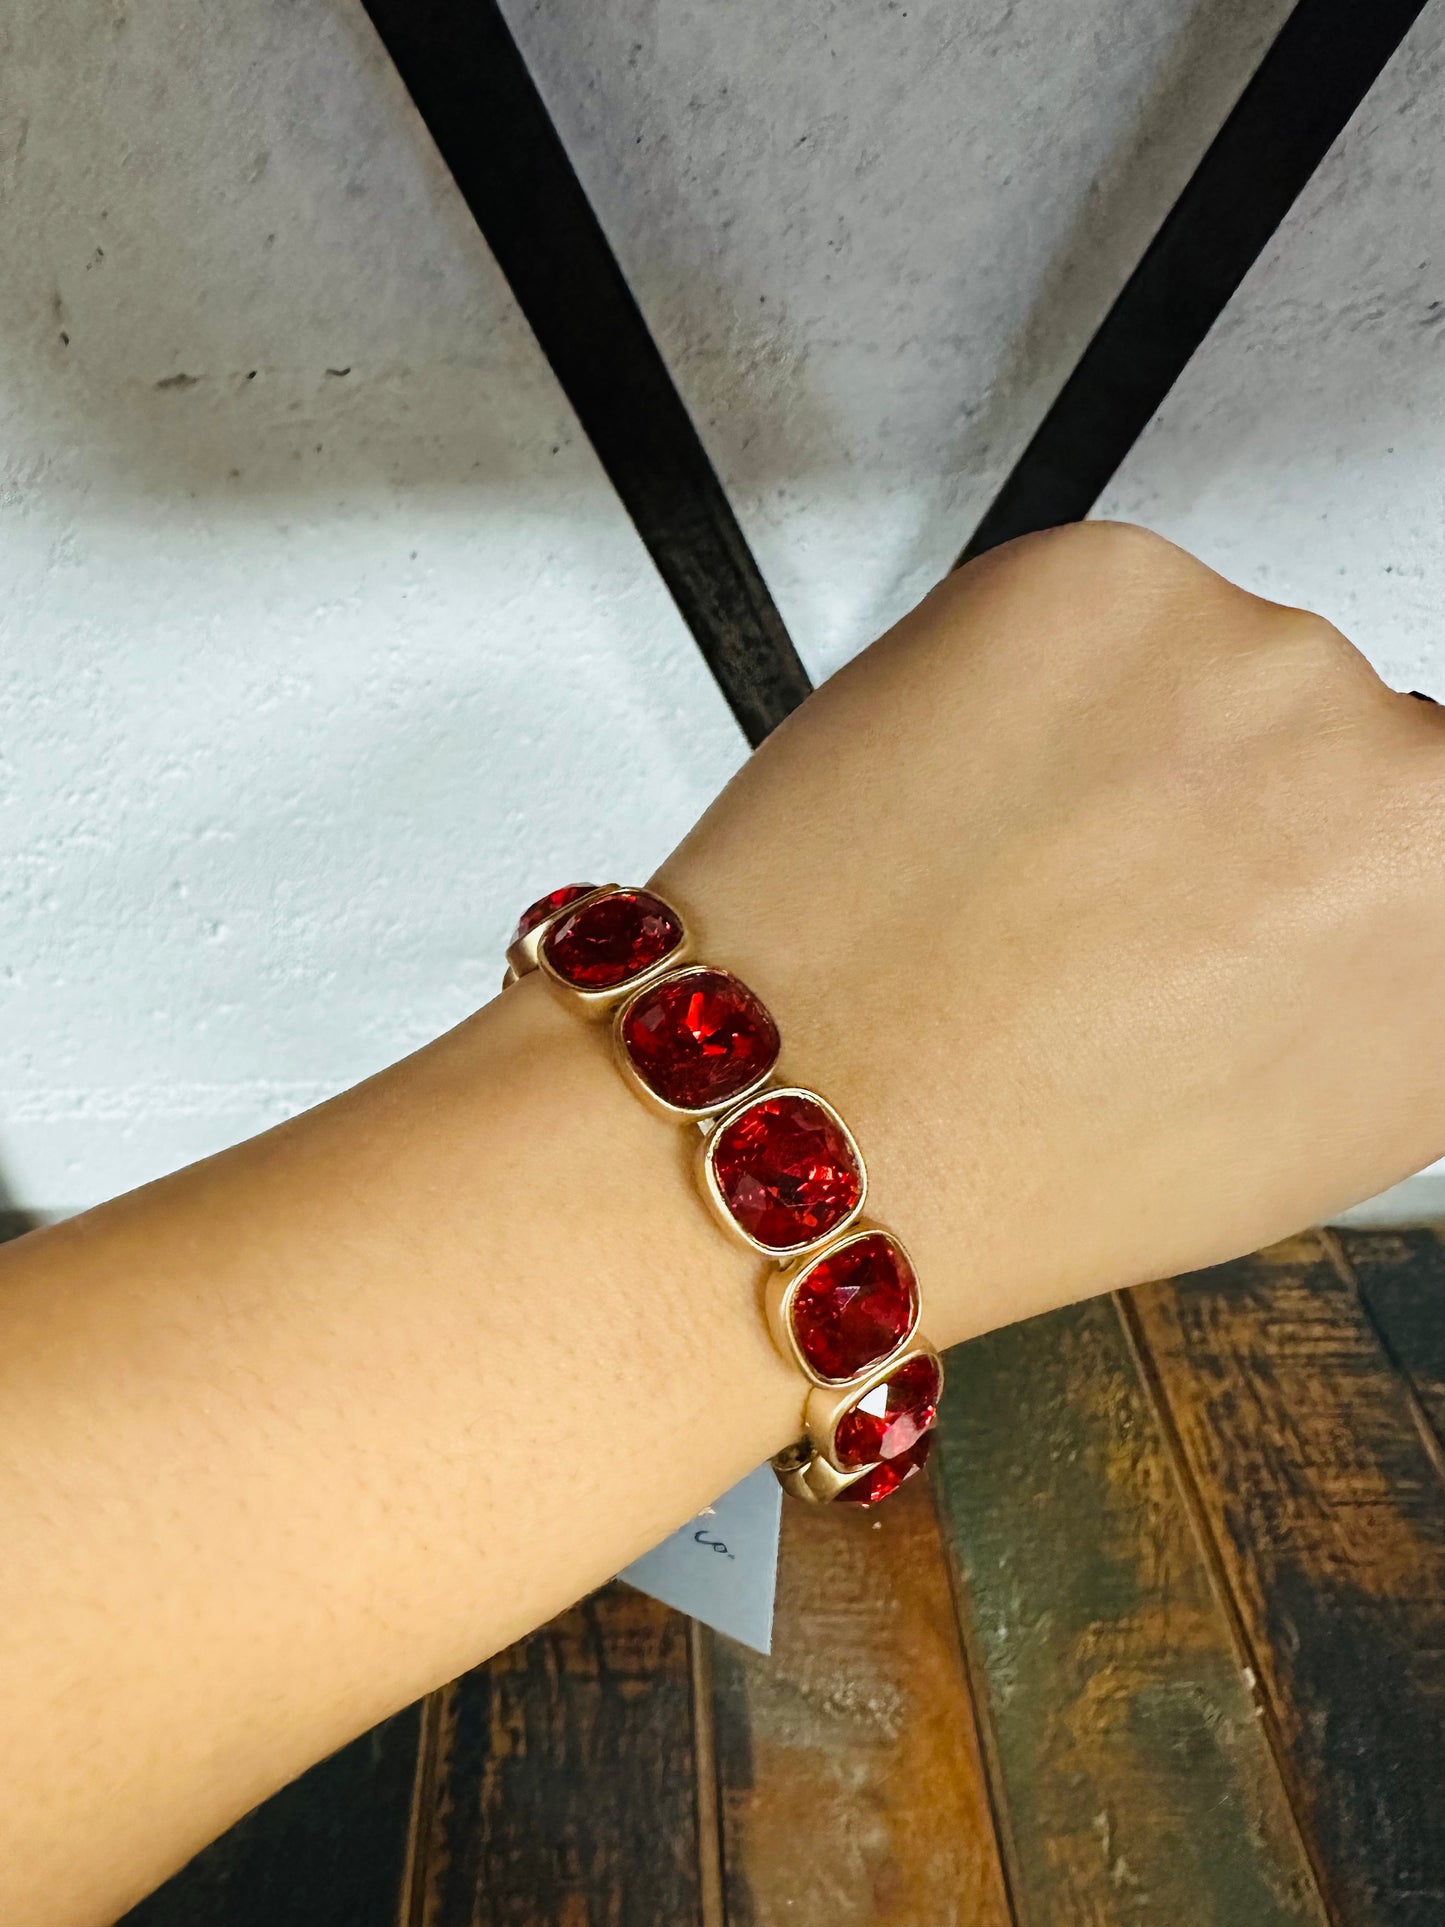 Red Rhinestone Bracelet